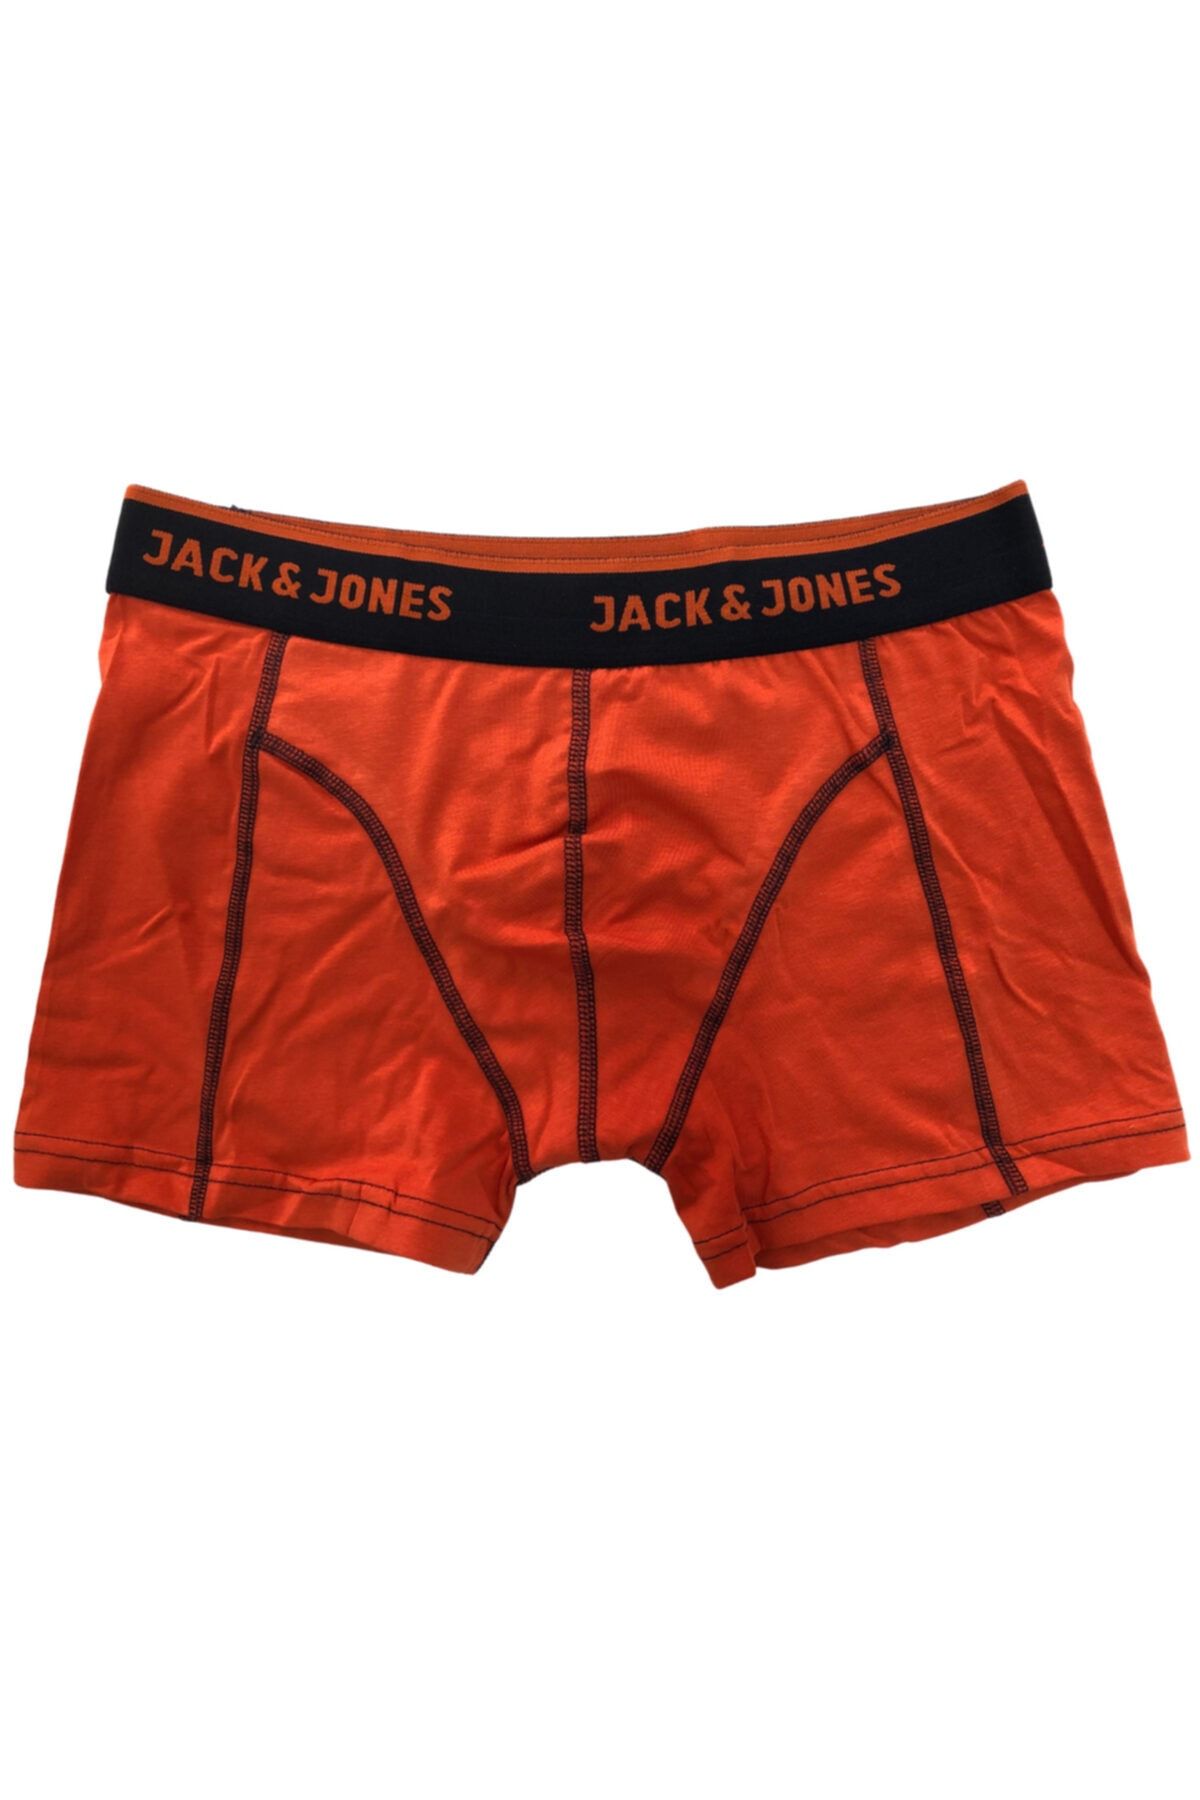 Jack & Jones Erkek Boxer